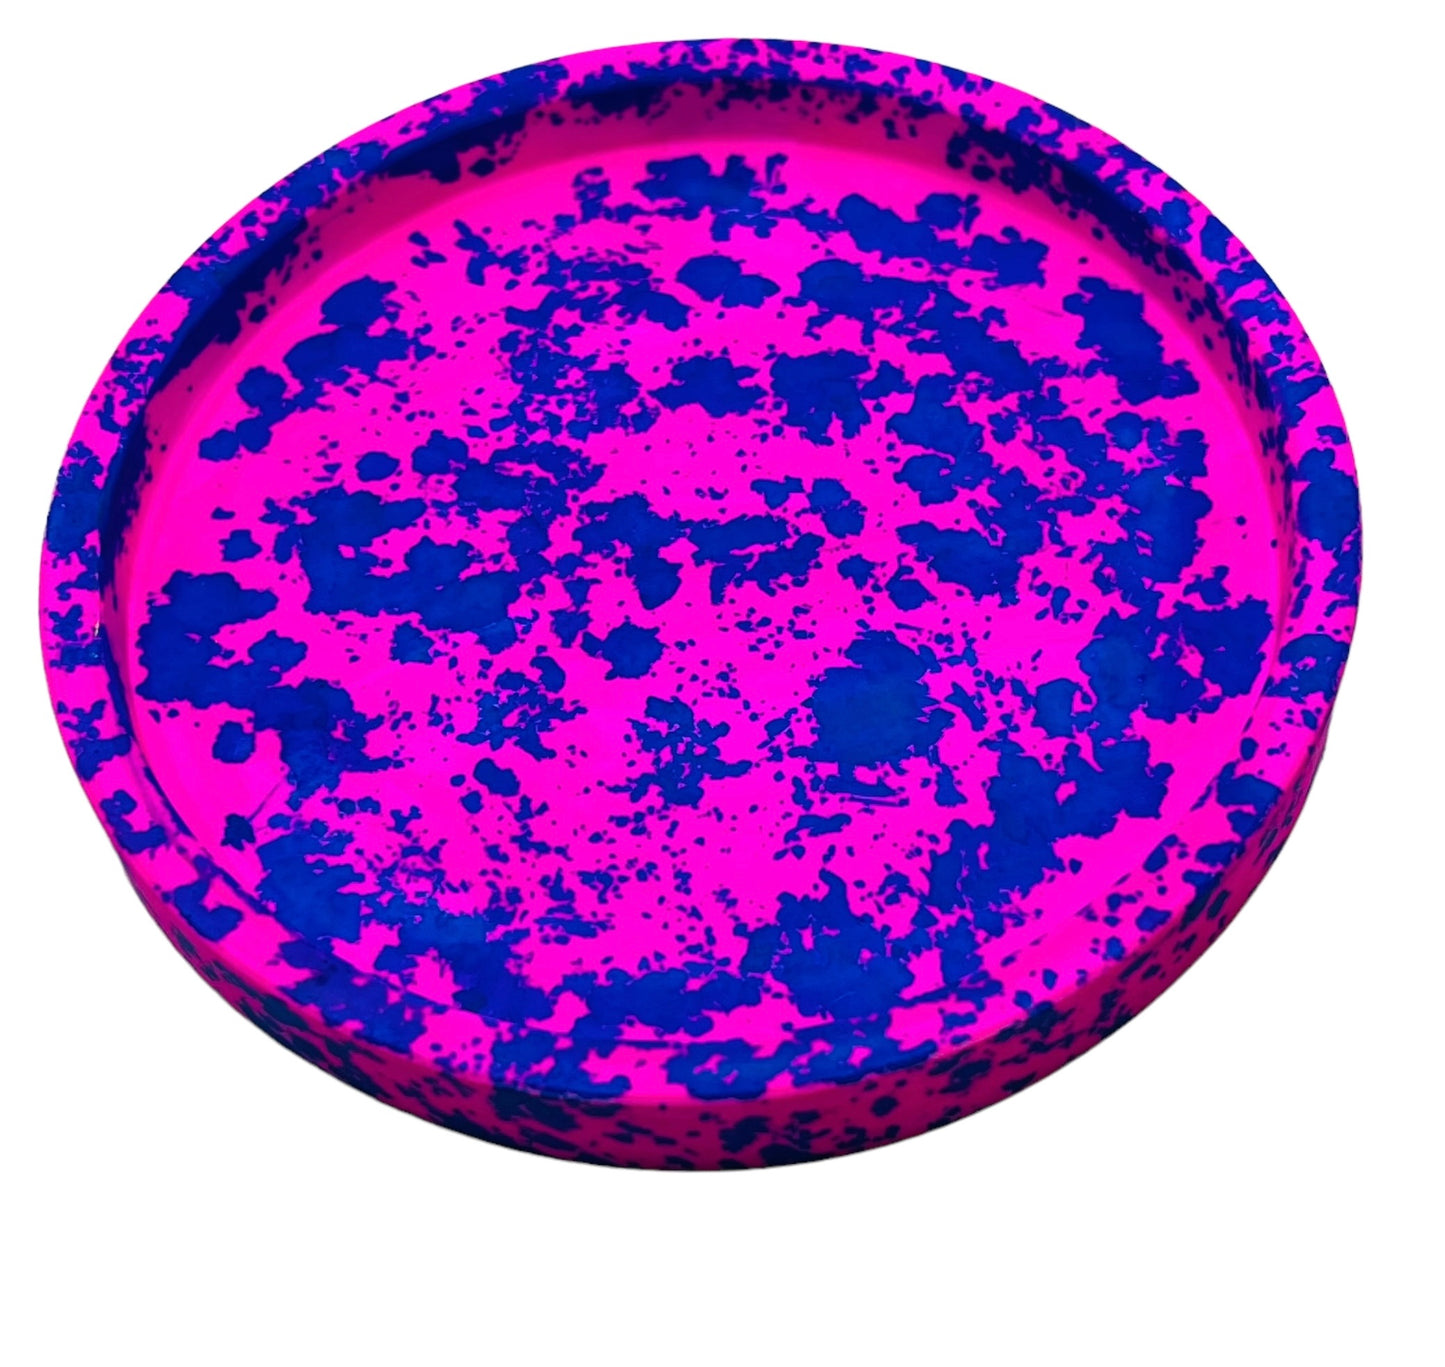 JenDore Handmade Hot Pink & Blue Splatter Chaos Circular Ceramic Vanity Tray